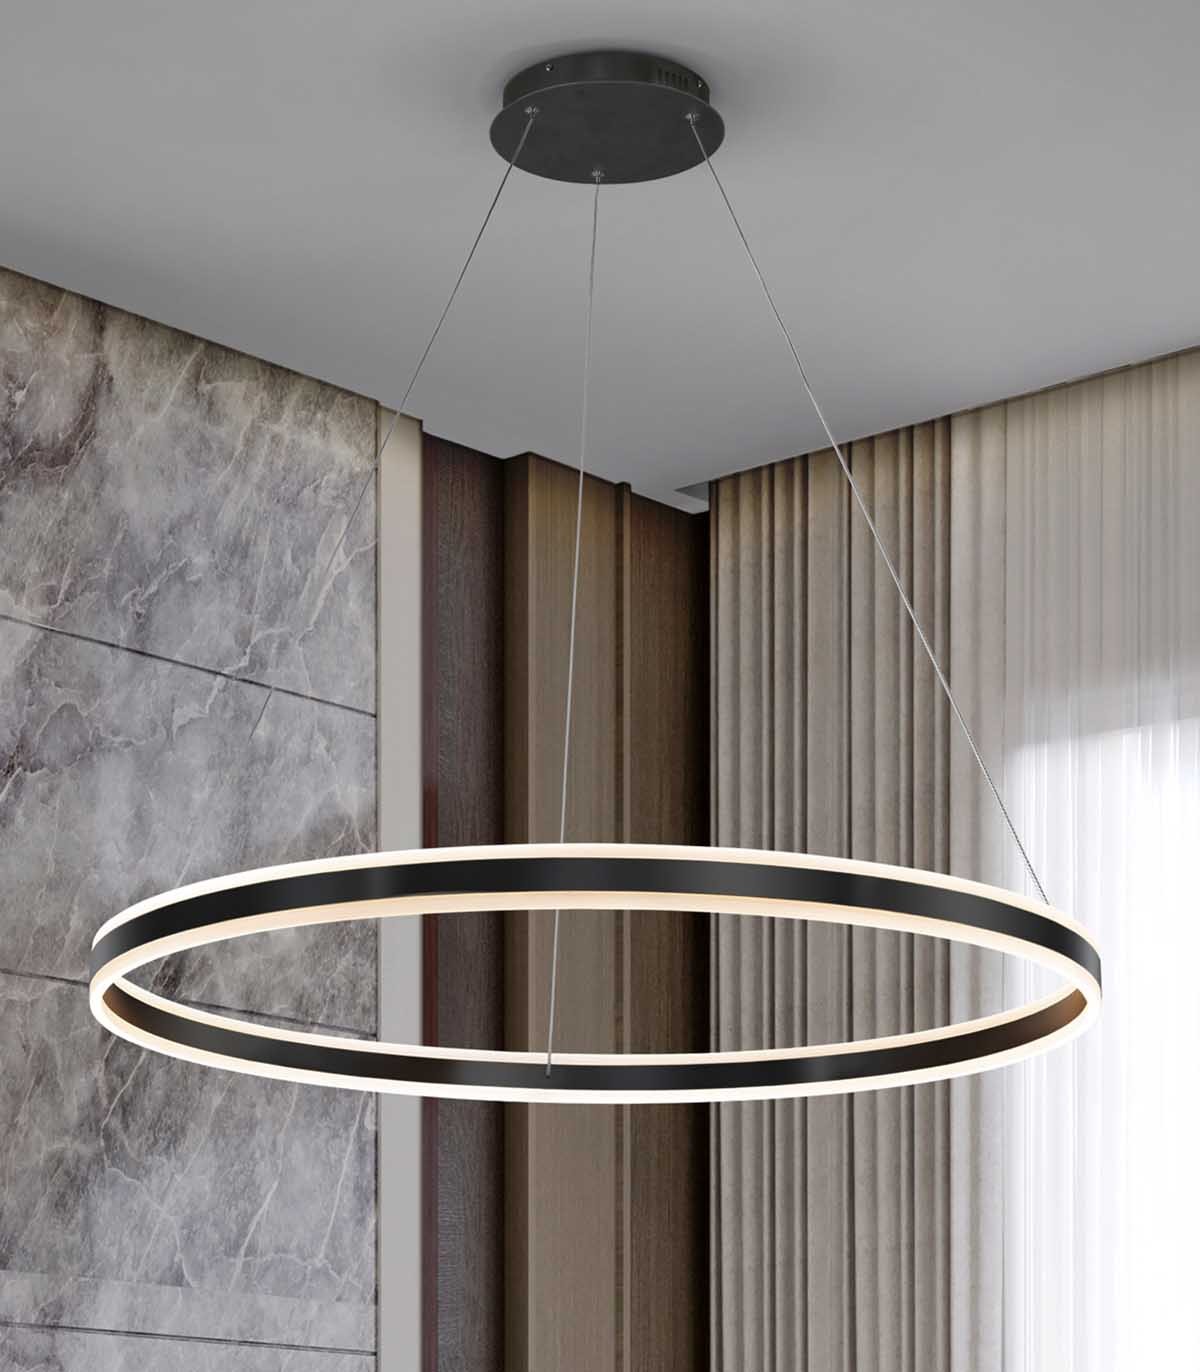 Lampe de plafond á LED Ring - Schuller 